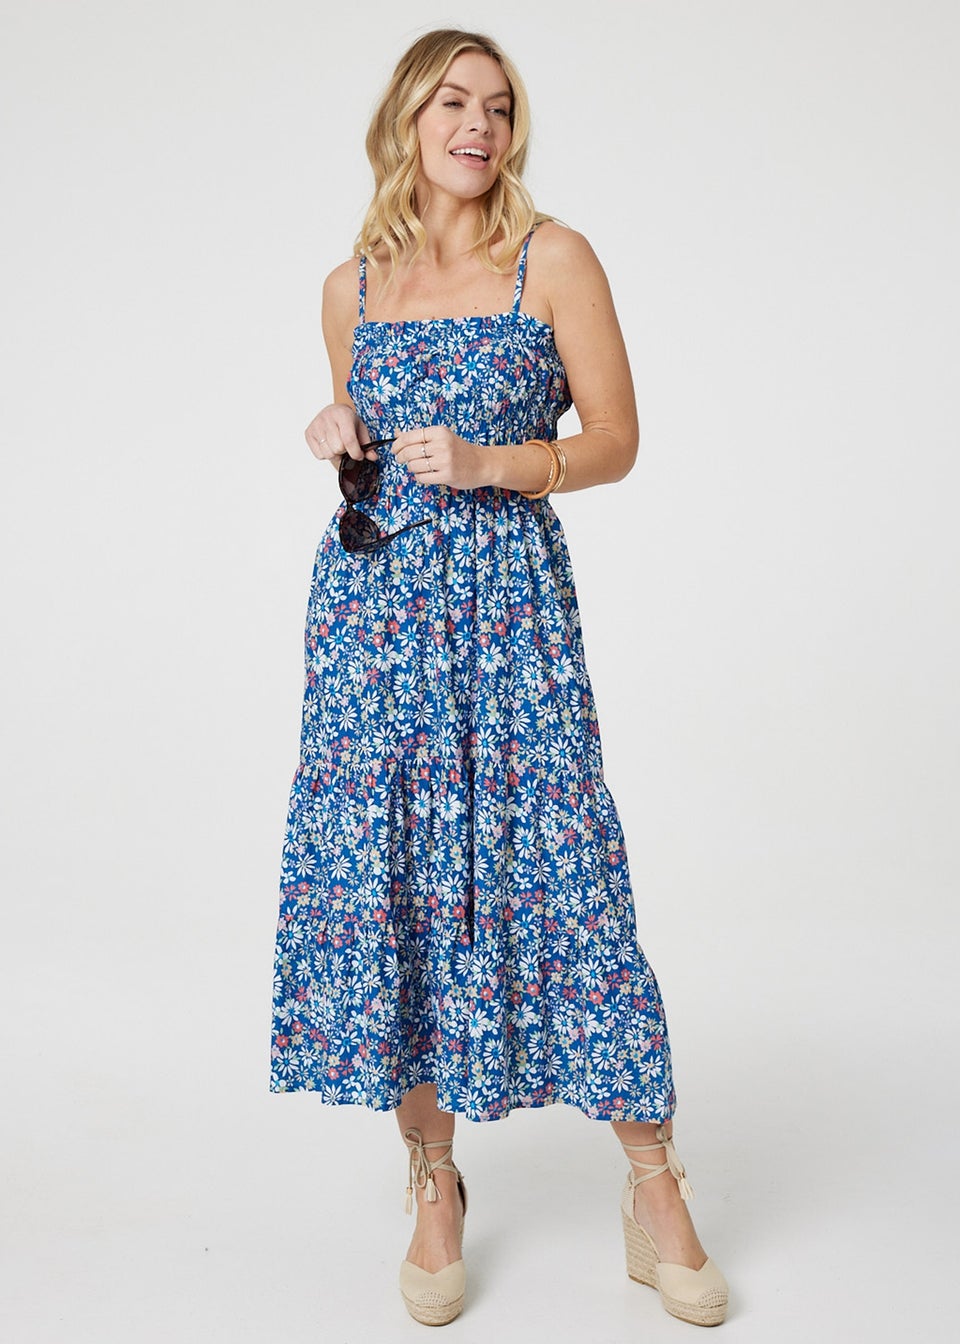 Izabel London Blue Floral Sleeveless Midi Sun Dress